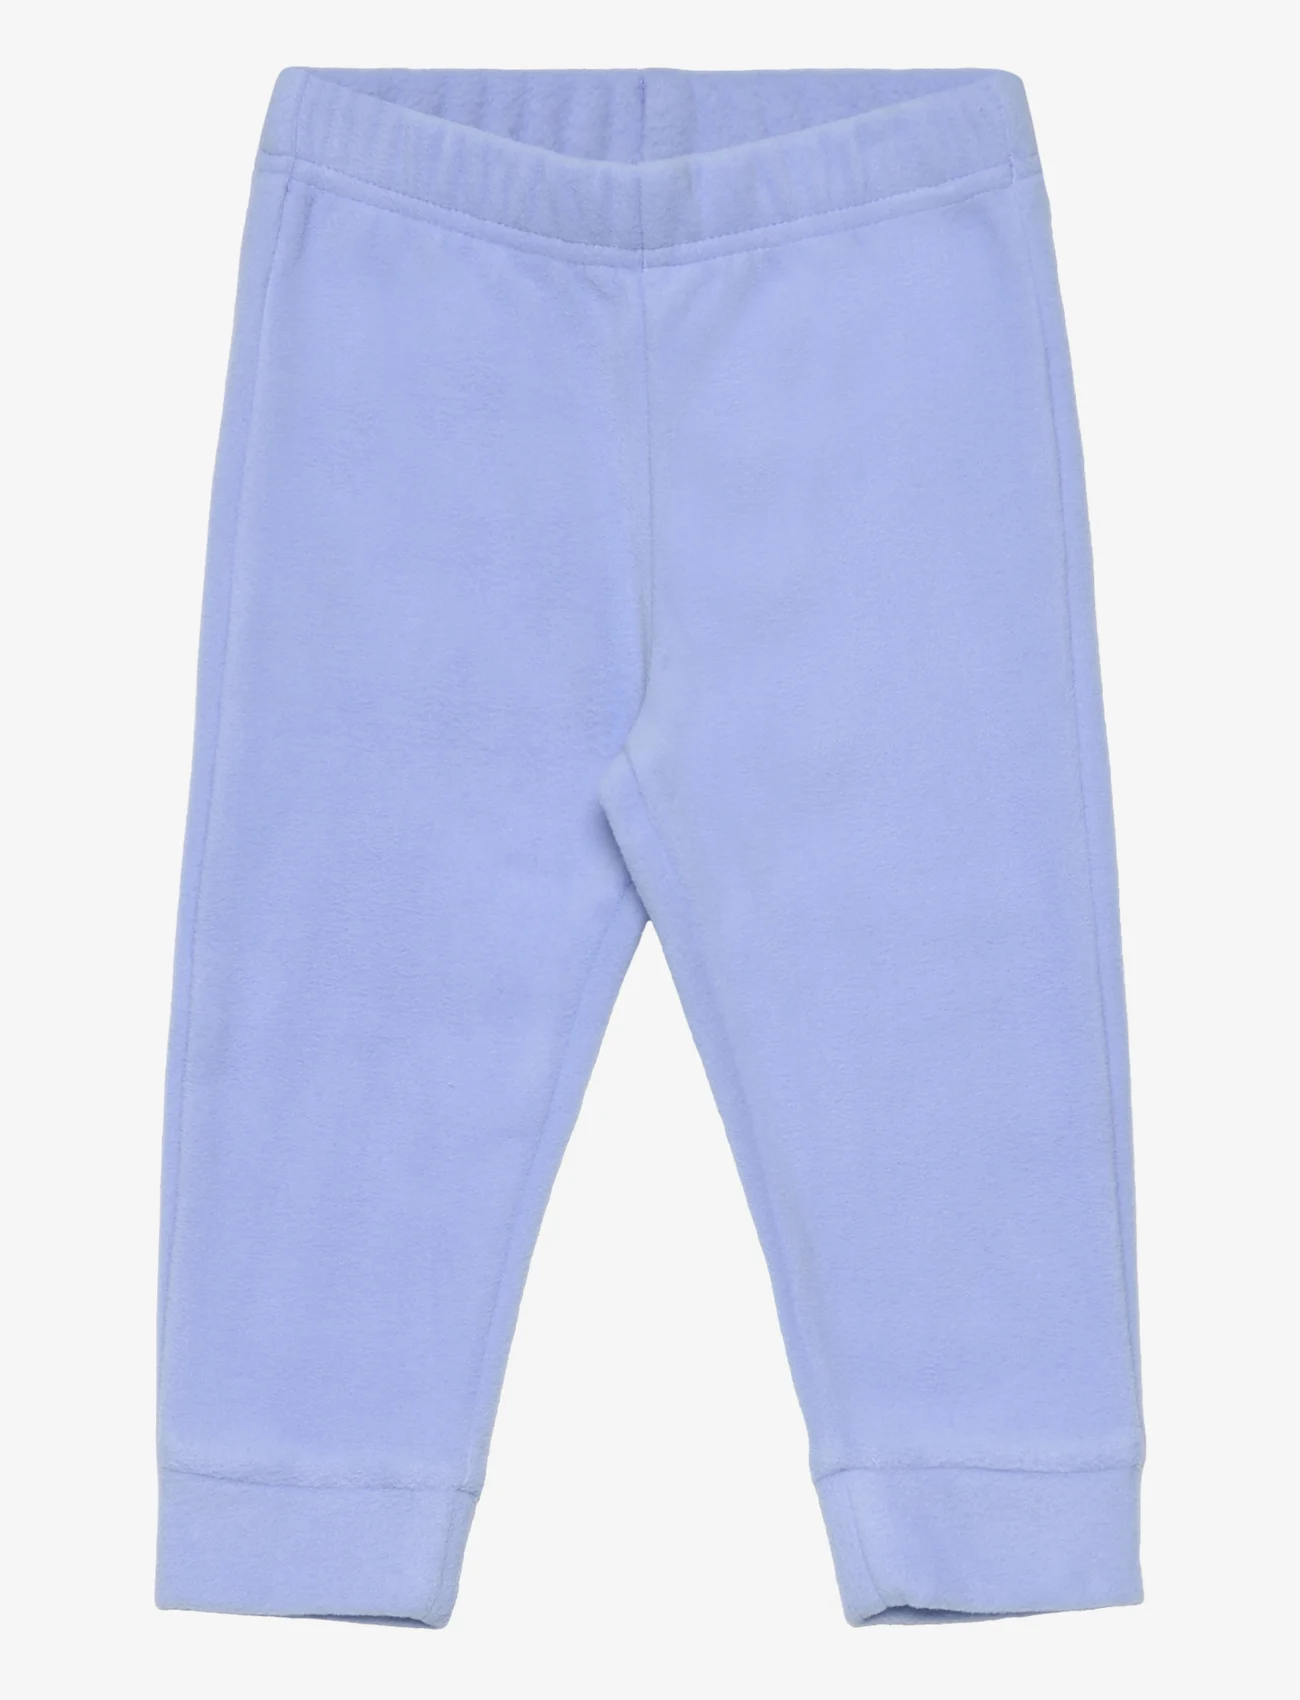 Lindex - Trousers Fleece - lowest prices - light blue - 0